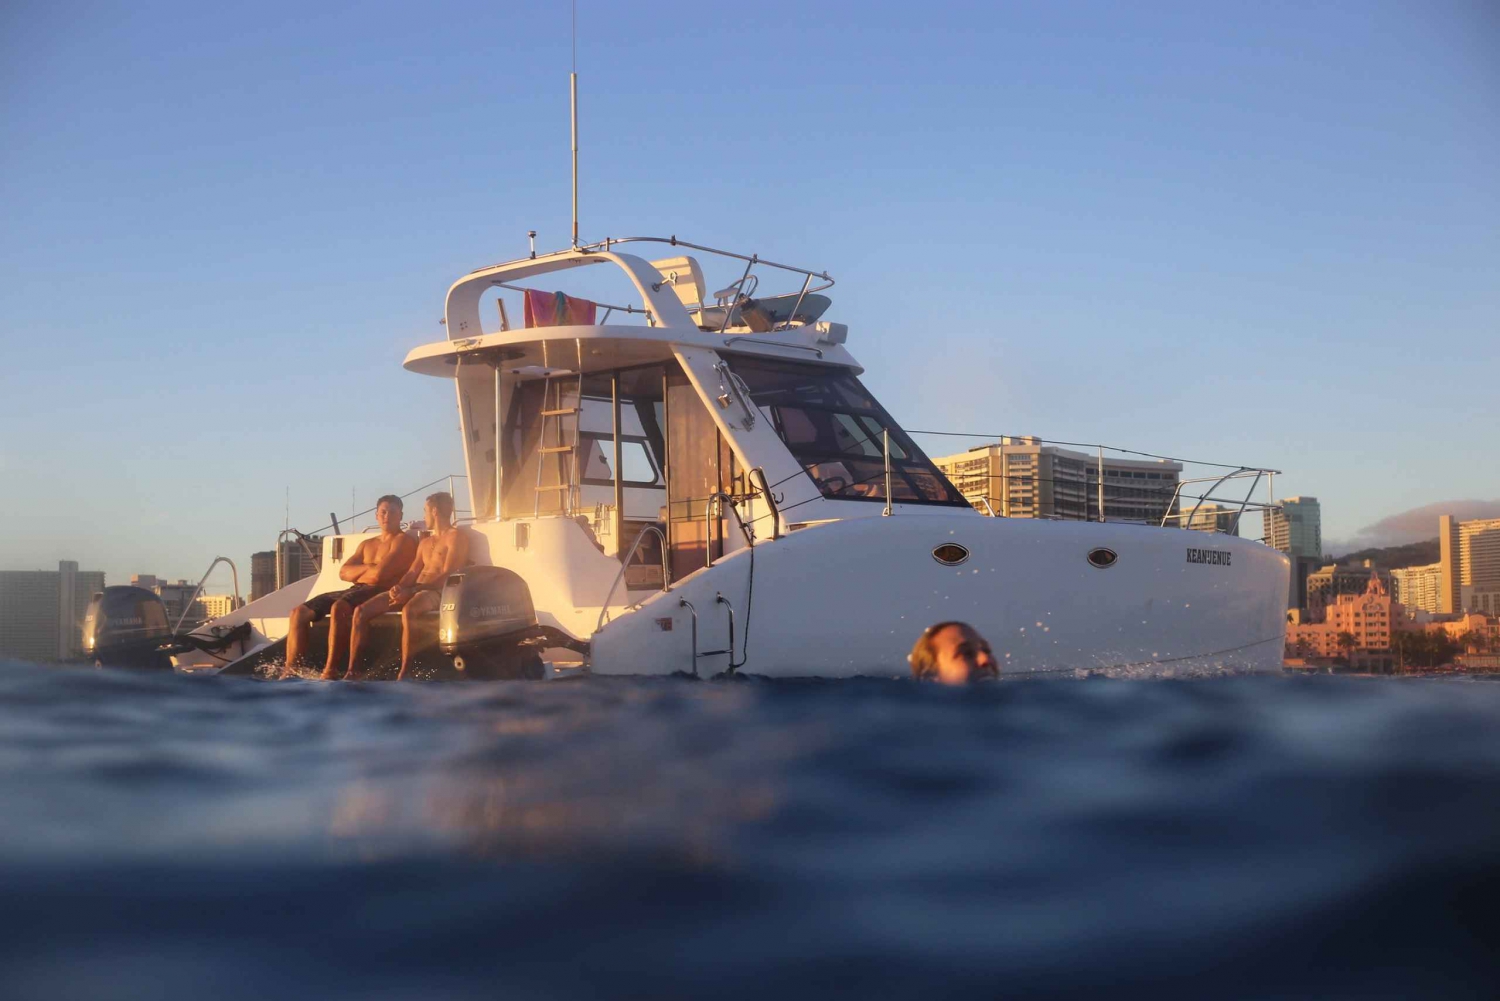 Oahu: Private Catamaran Sunset Cruise with A Guide